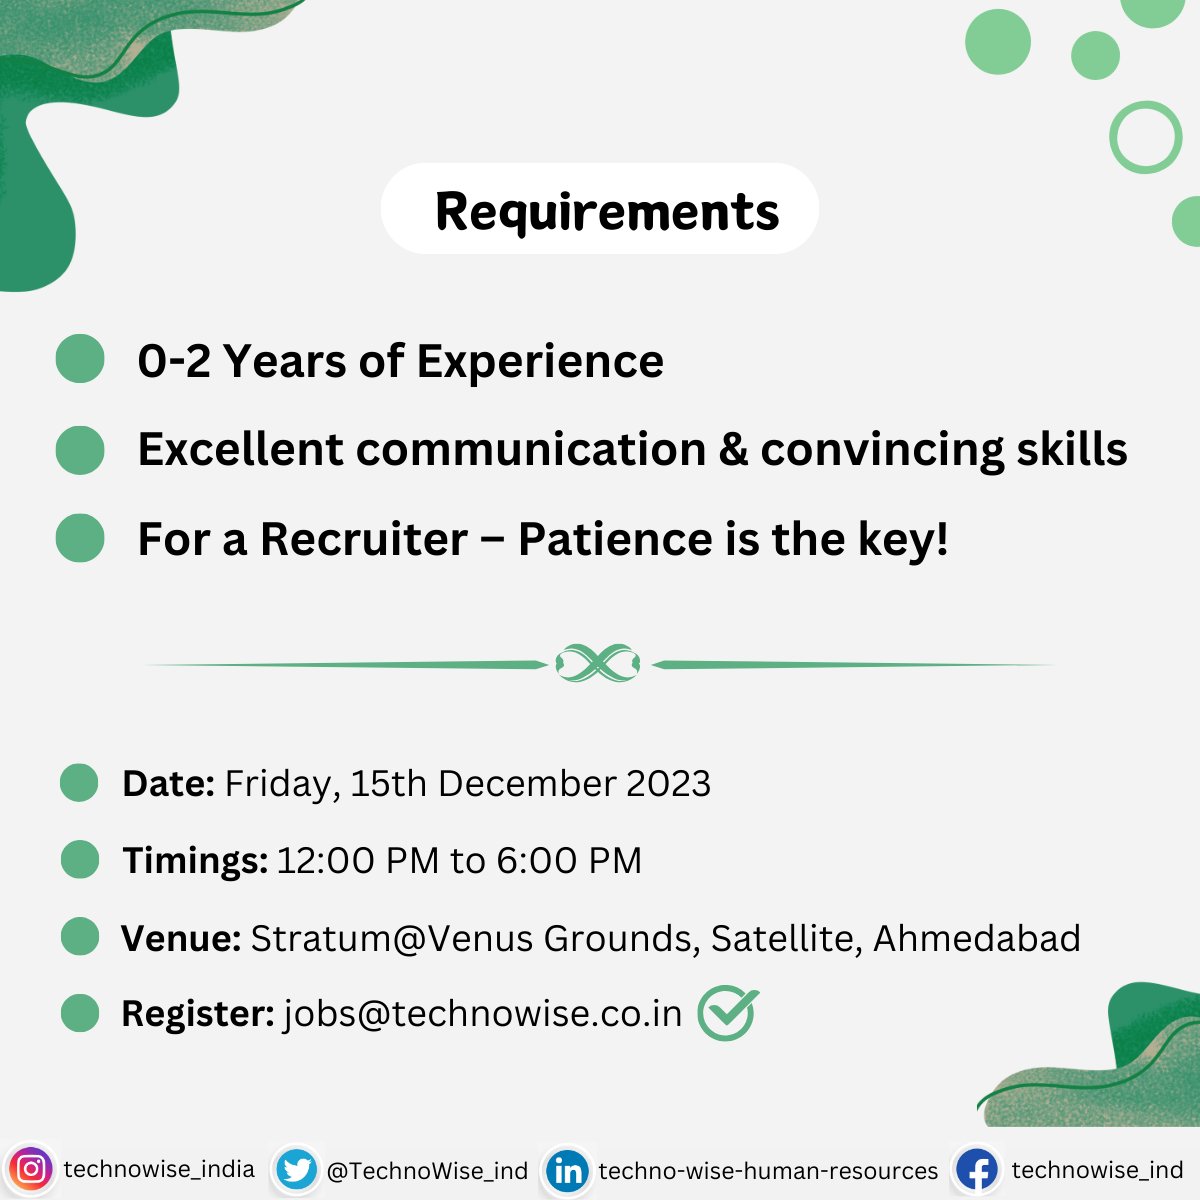 𝗙𝗿𝗲𝘀𝗵𝗲𝗿𝘀 𝗹𝗼𝗼𝗸𝗶𝗻𝗴 𝘁𝗼 𝗸𝗶𝗰𝗸-𝘀𝘁𝗮𝗿𝘁 𝘁𝗵𝗲𝗶𝗿 𝗰𝗮𝗿𝗲𝗲𝗿 𝗶𝗻 𝗛𝗥 𝗥𝗲𝗰𝗿𝘂𝗶𝘁𝗺𝗲𝗻𝘁

#Recruiter #ITRecruitment #HR #DigitalMarketing #BDE #Freshers #Jobs #Ahmedabad #Recruitment #WalkIn #WalkInDrive

Follow: #TechnoWise_India